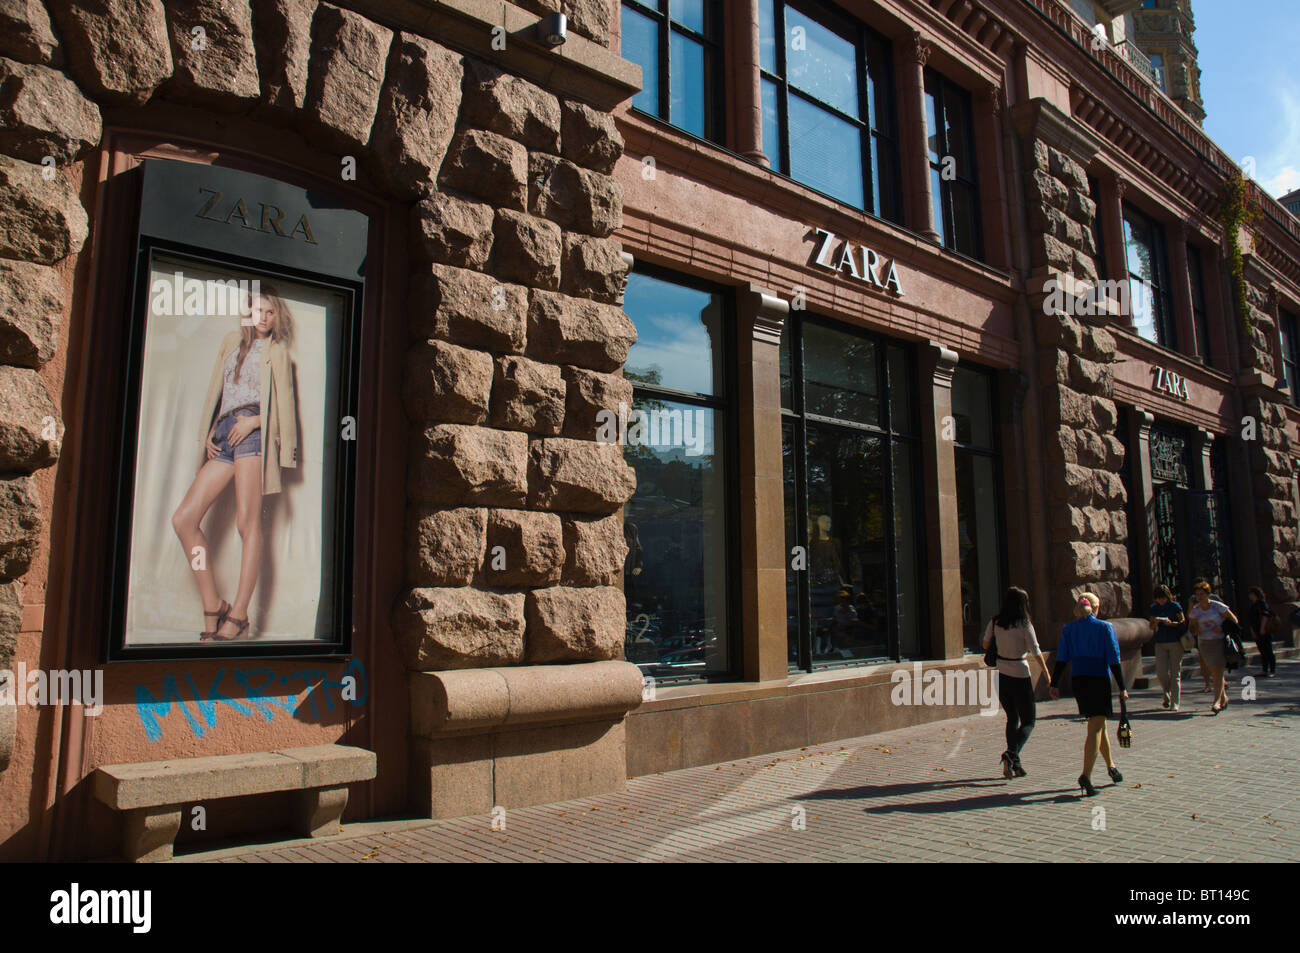 Zara shop along Kreshchatyk street central Kiev Ukraine Europe Stock Photo  - Alamy